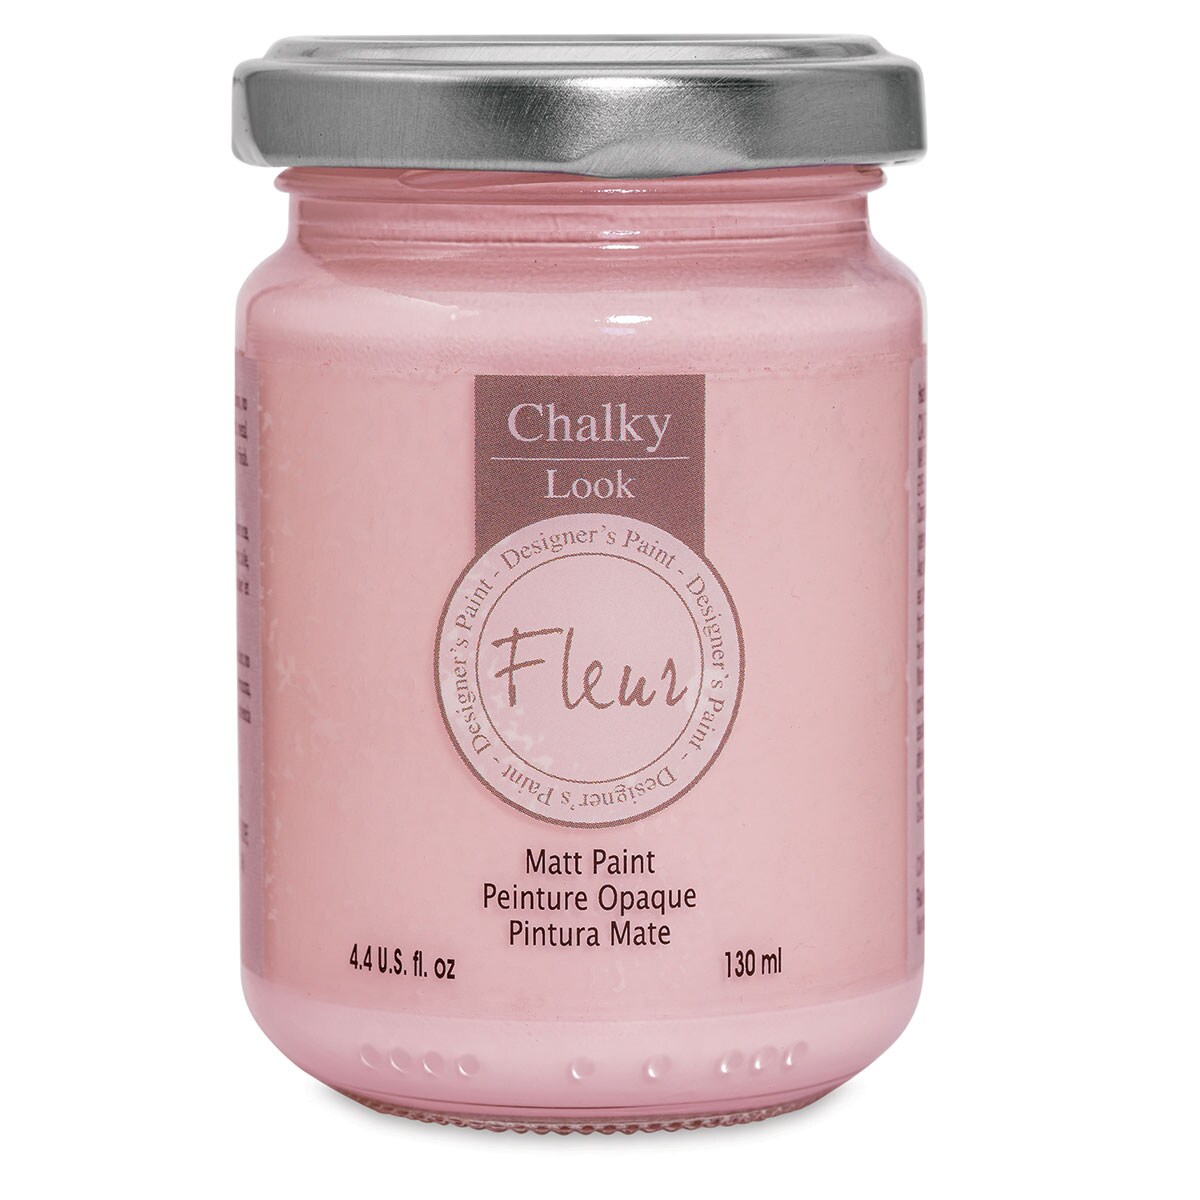 Fleur Chalky Look Paint - Pretty Ballerina, 4.4 oz jar